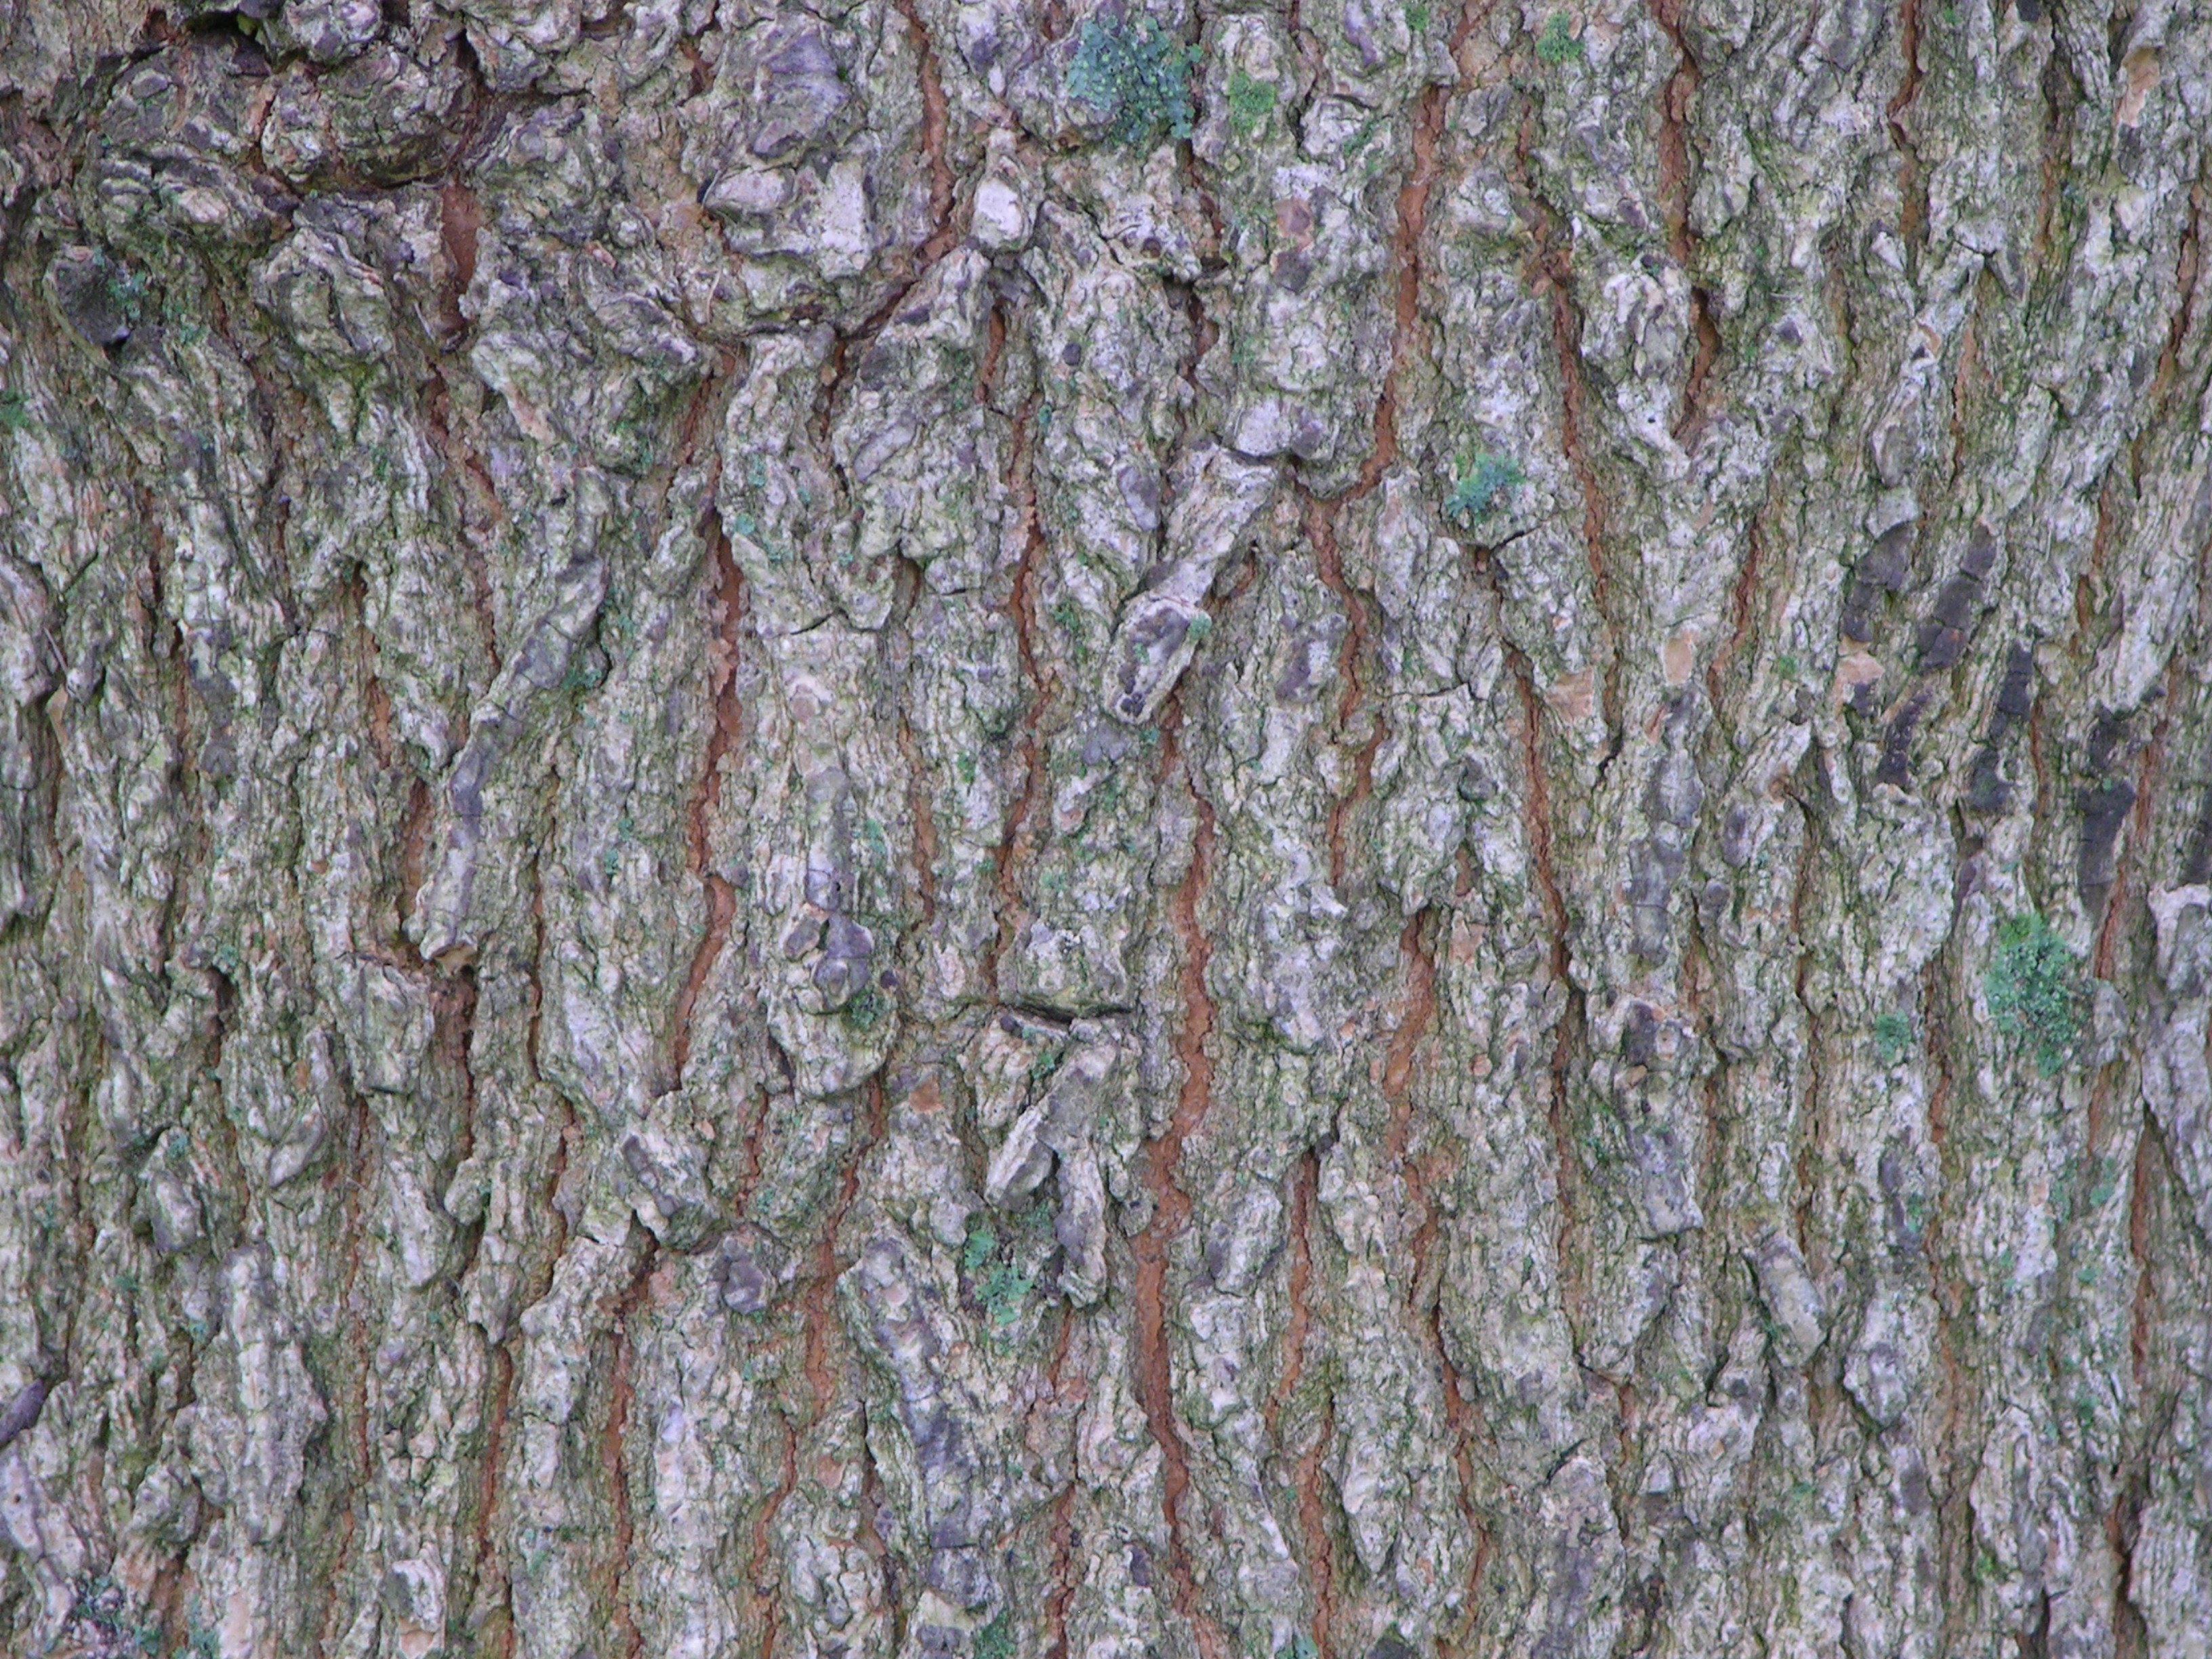 File:Purpleblow Maple Acer truncatum Bark 3264px.jpg - Wikimedia Commons